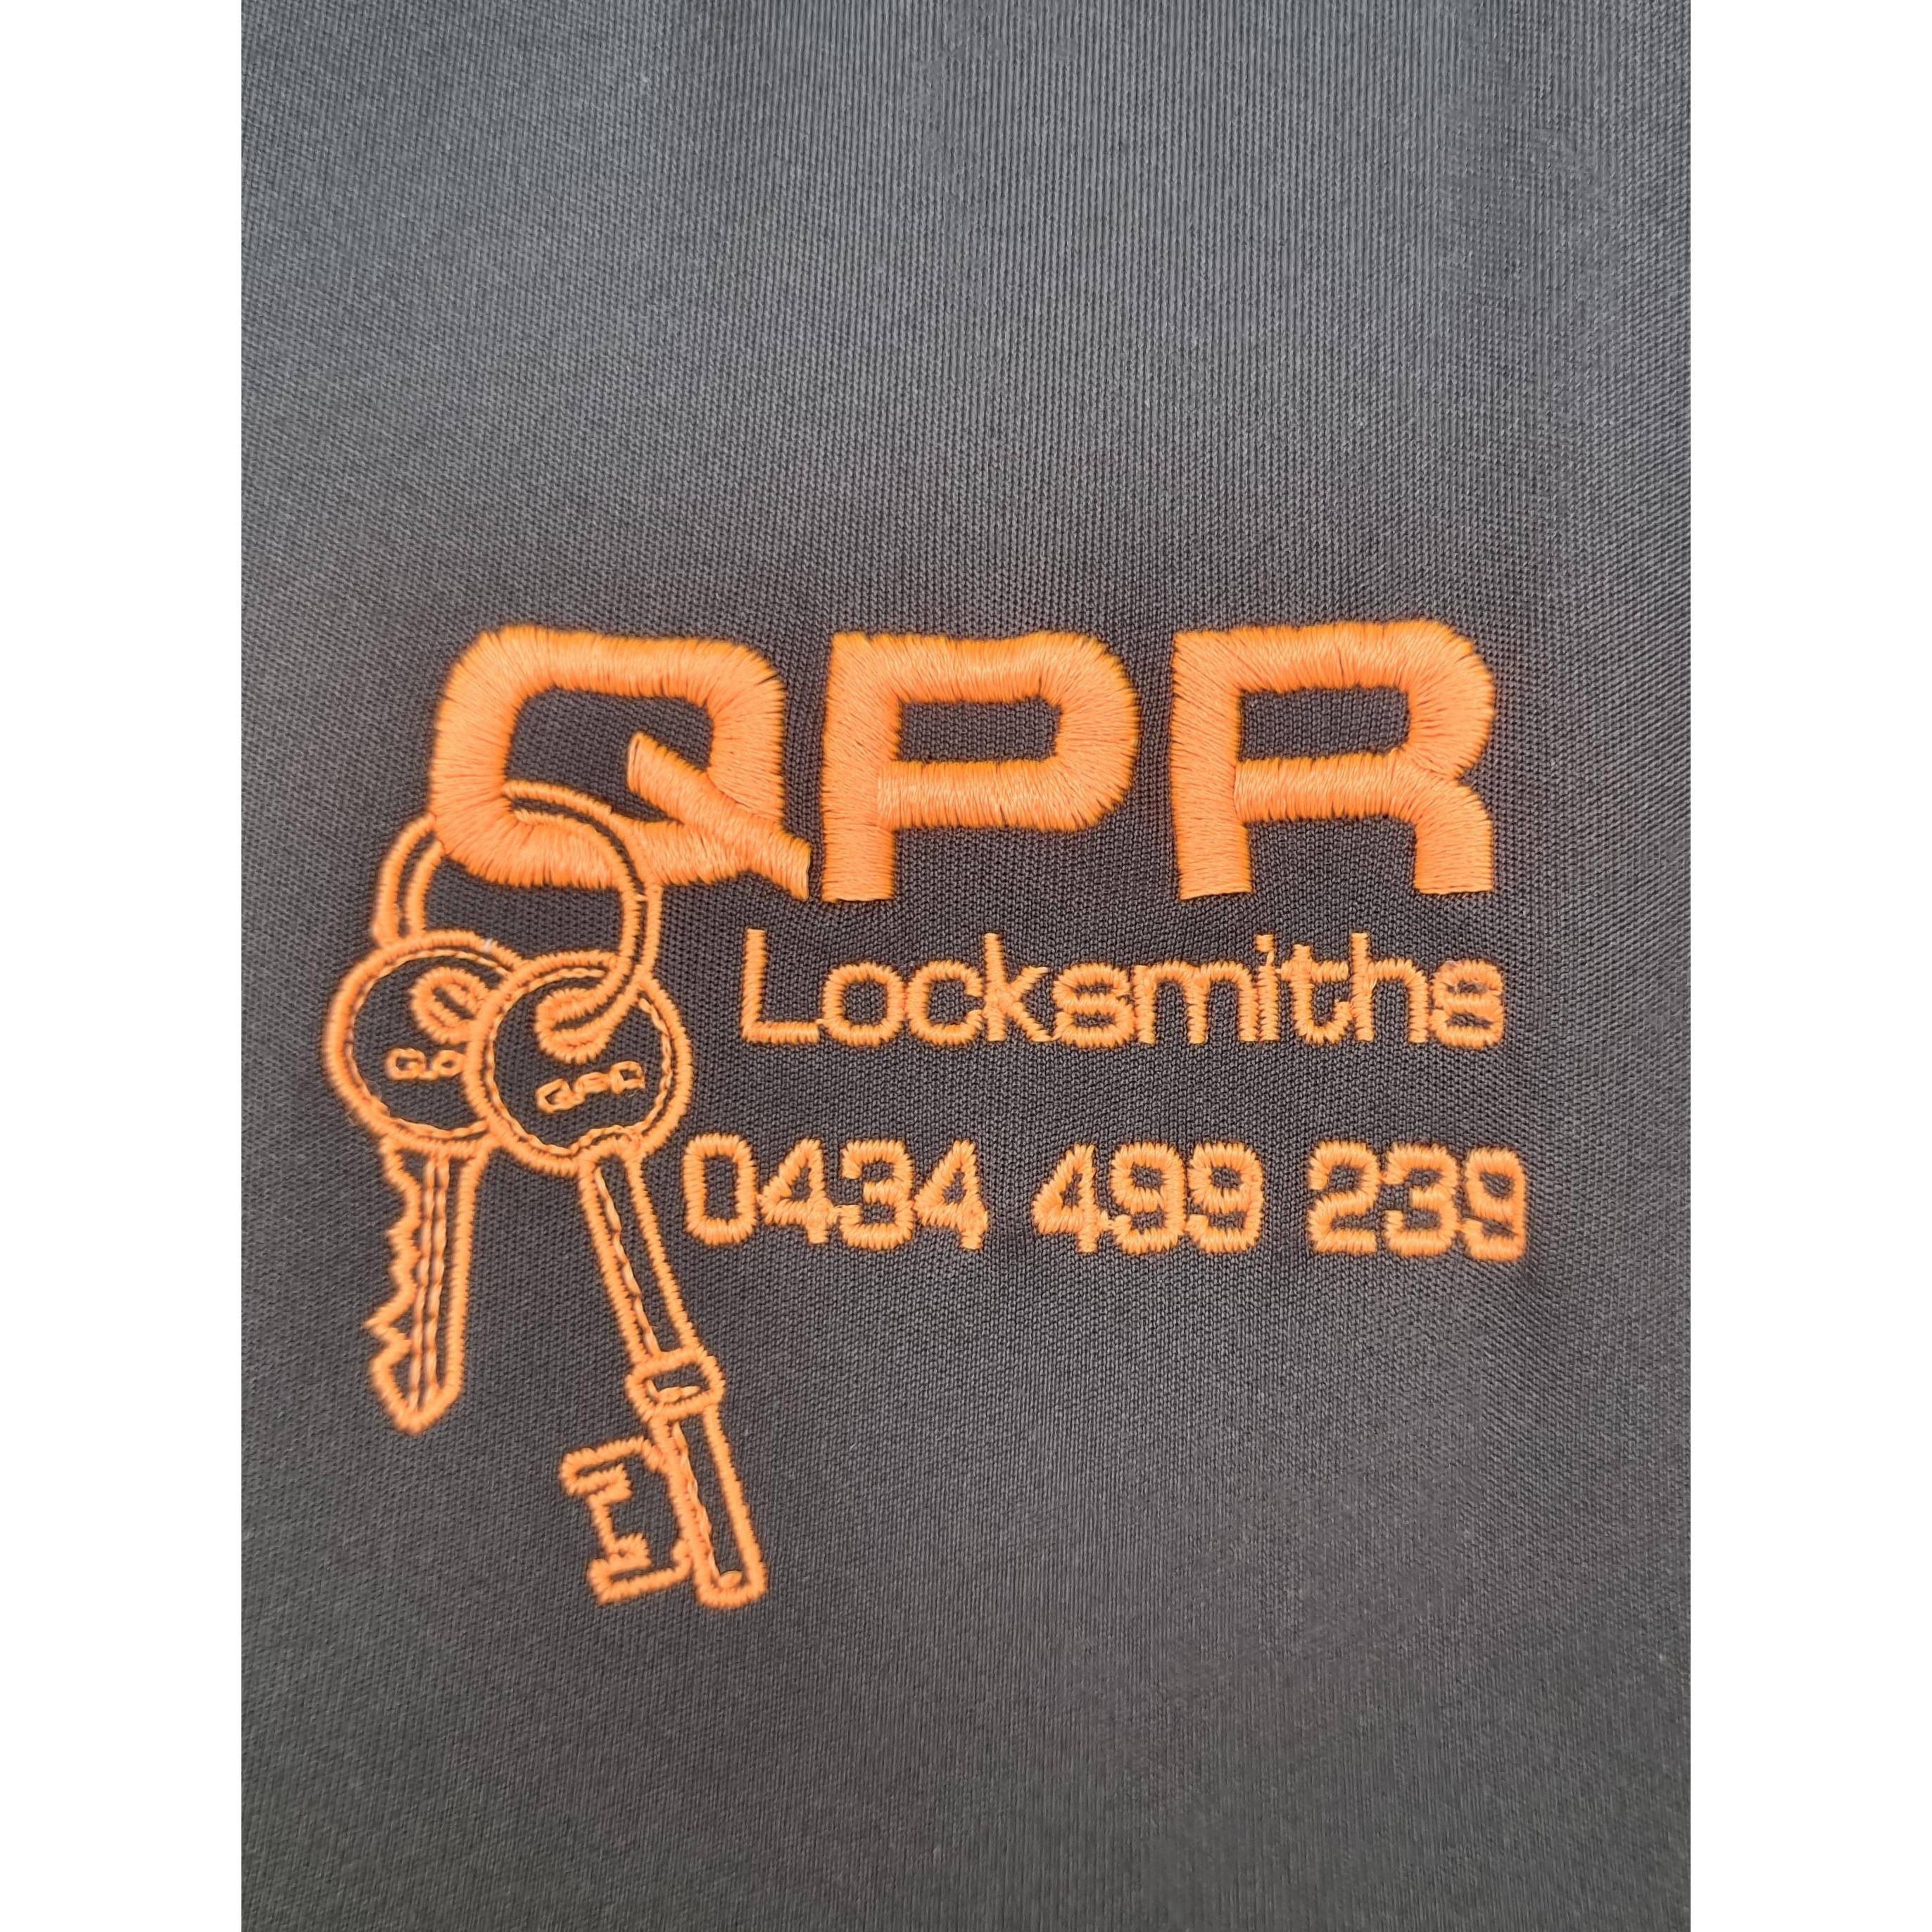 QPR Locksmiths Logo